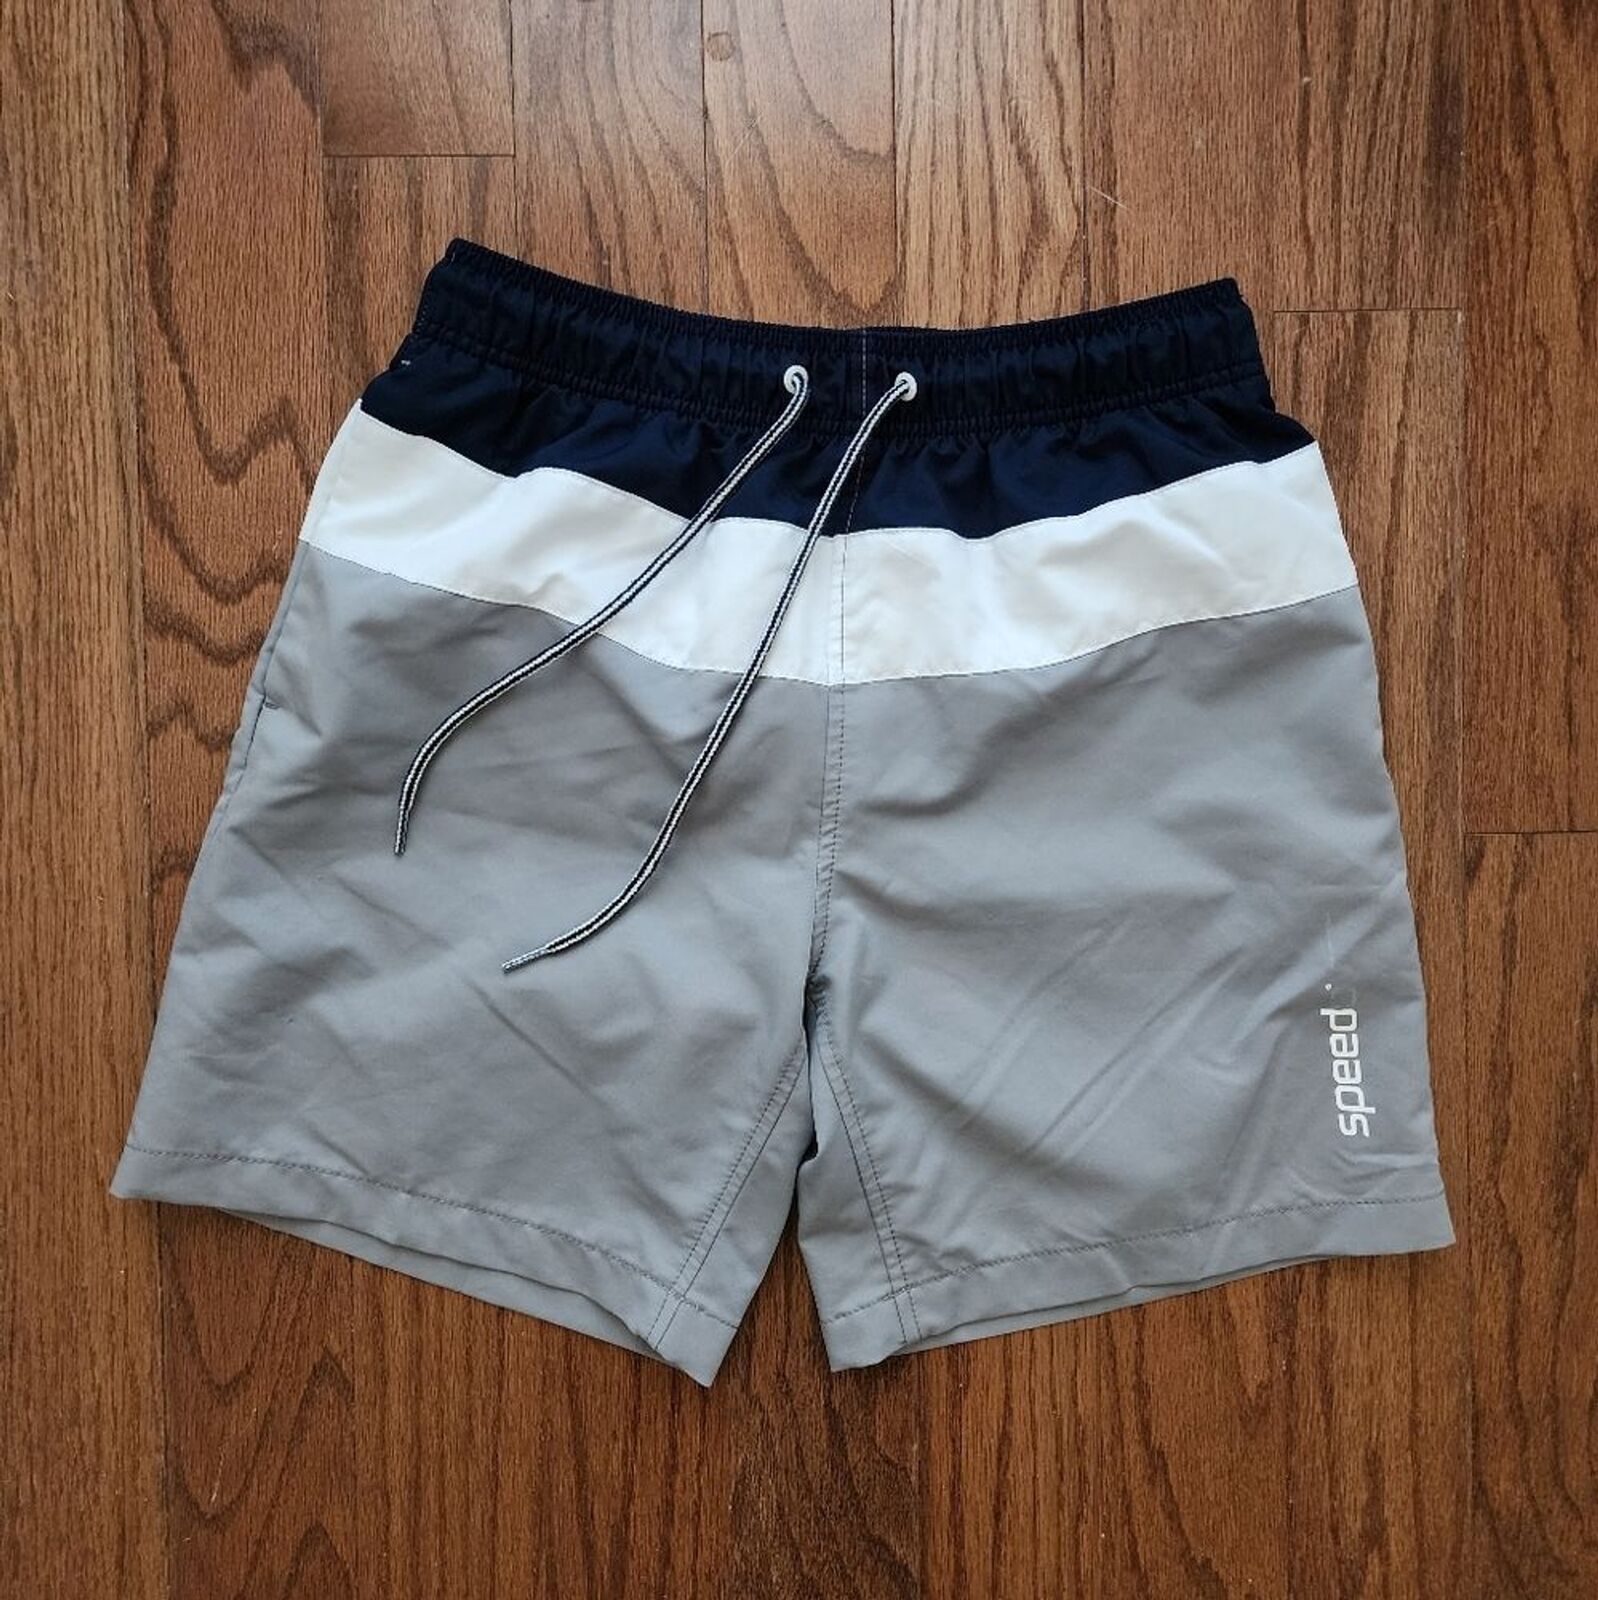 Speedo Men's Colorblock Swim Shorts Size Small - image 1